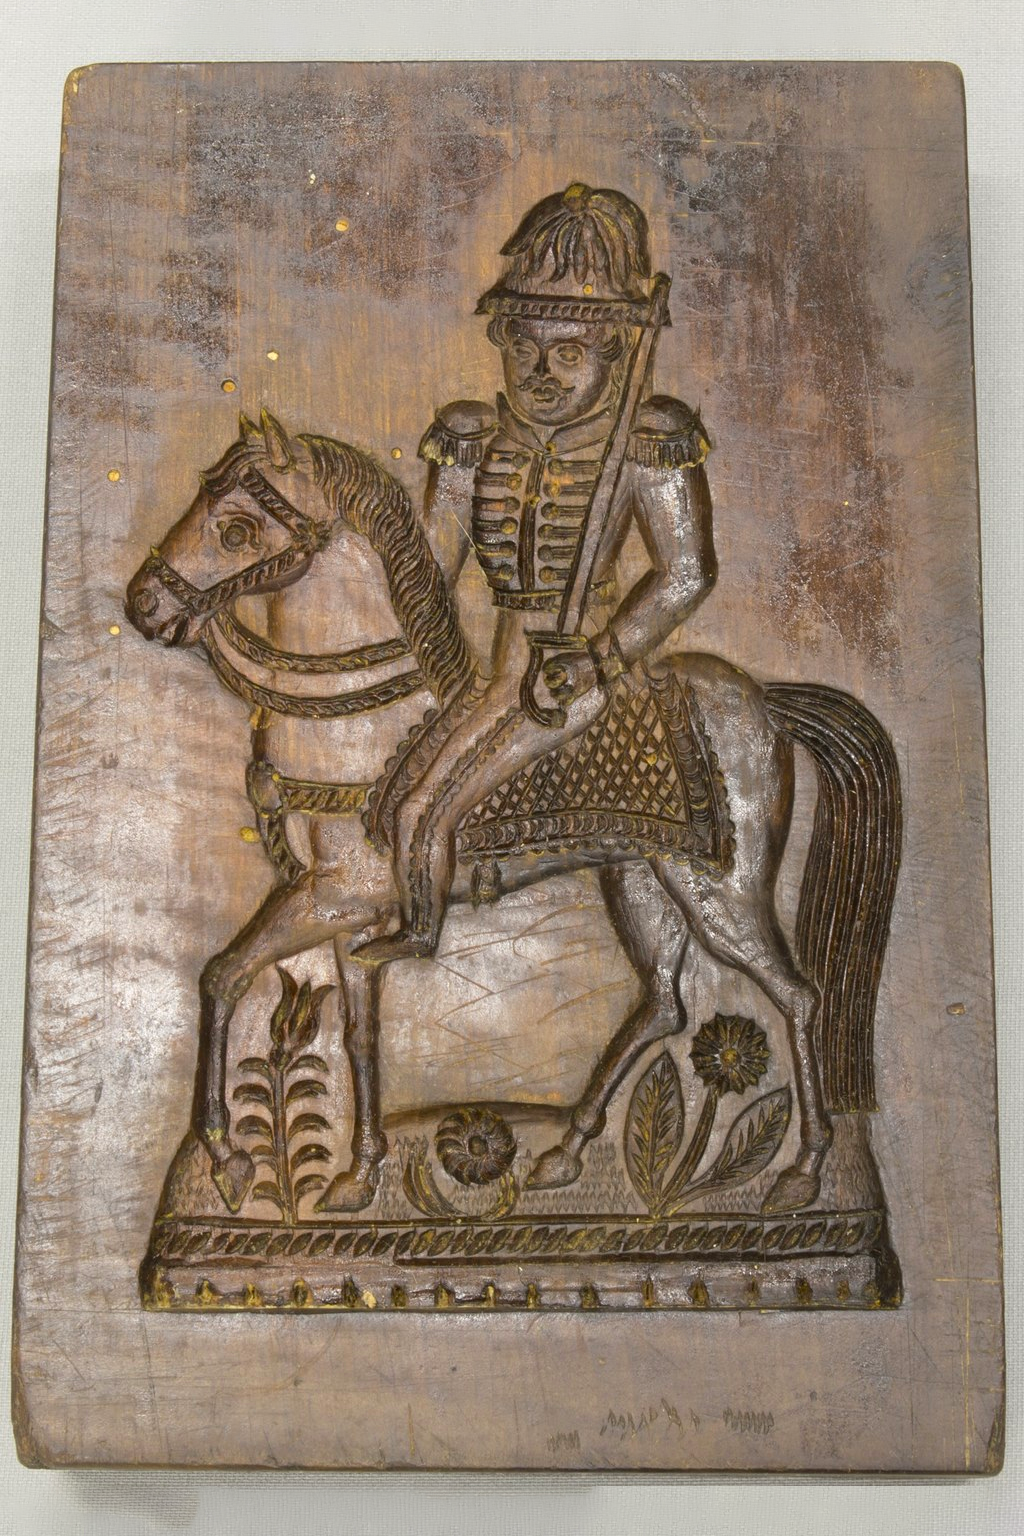 A springerle mold depicting a man on a horse